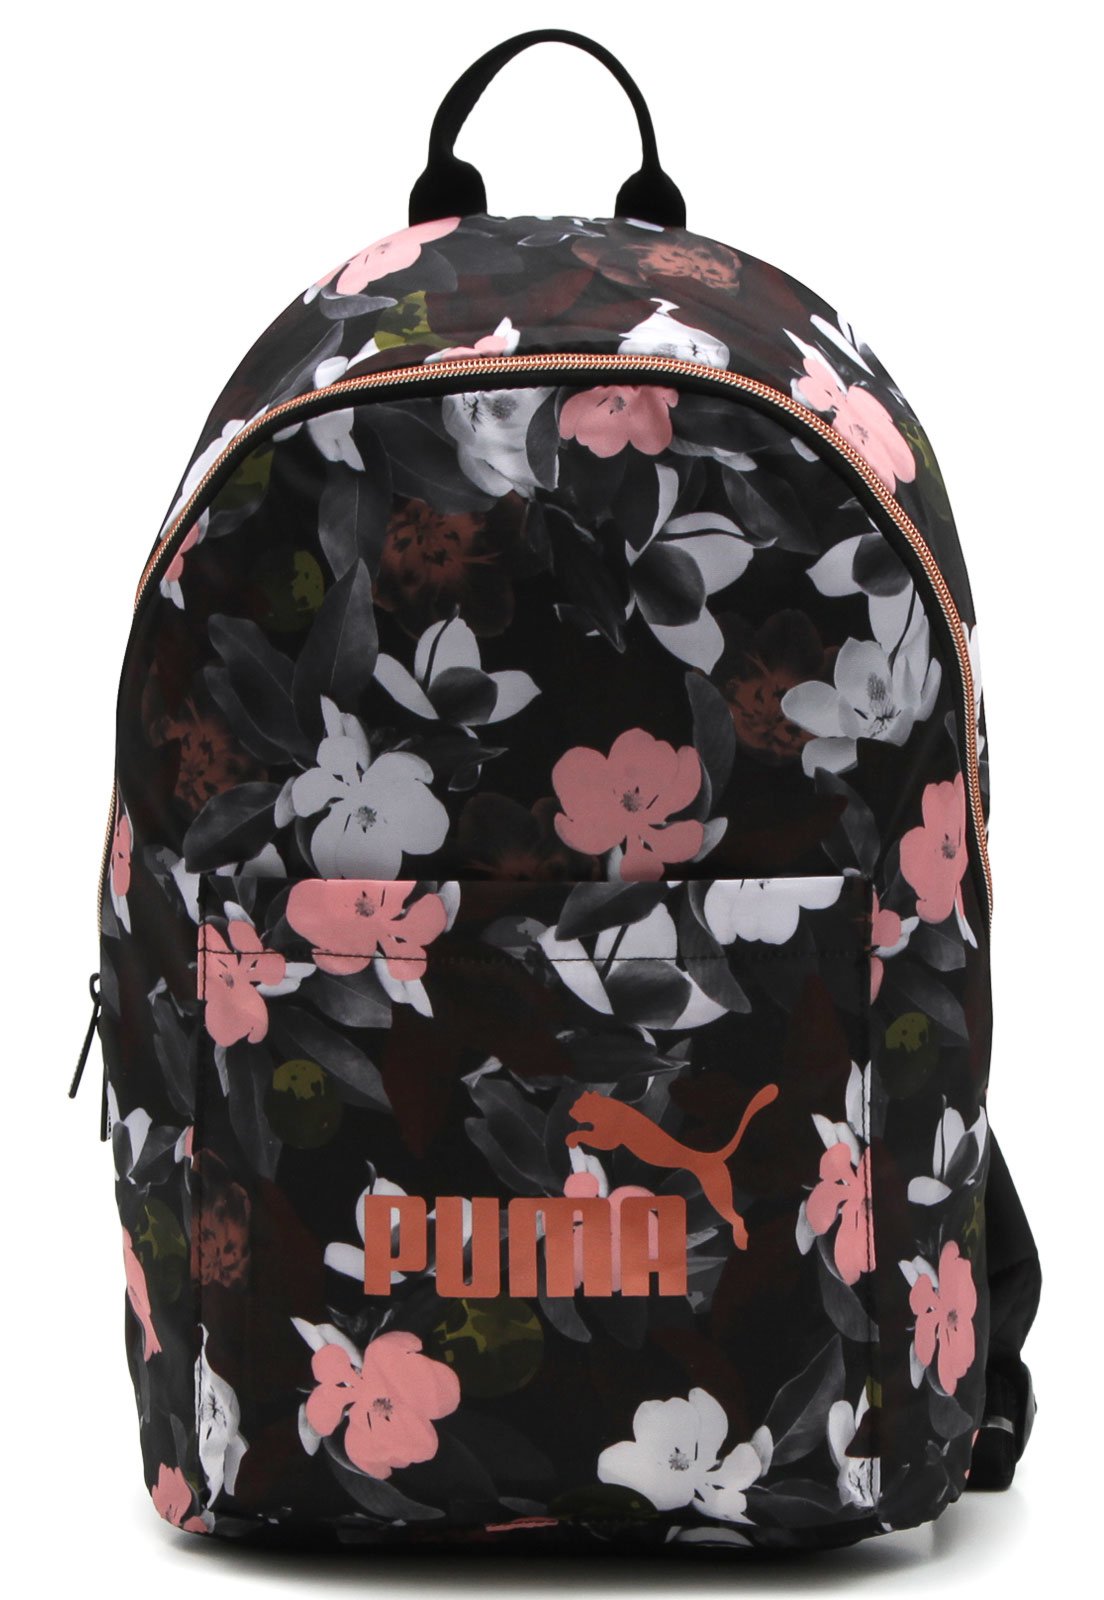 mochila puma wmn core backpack